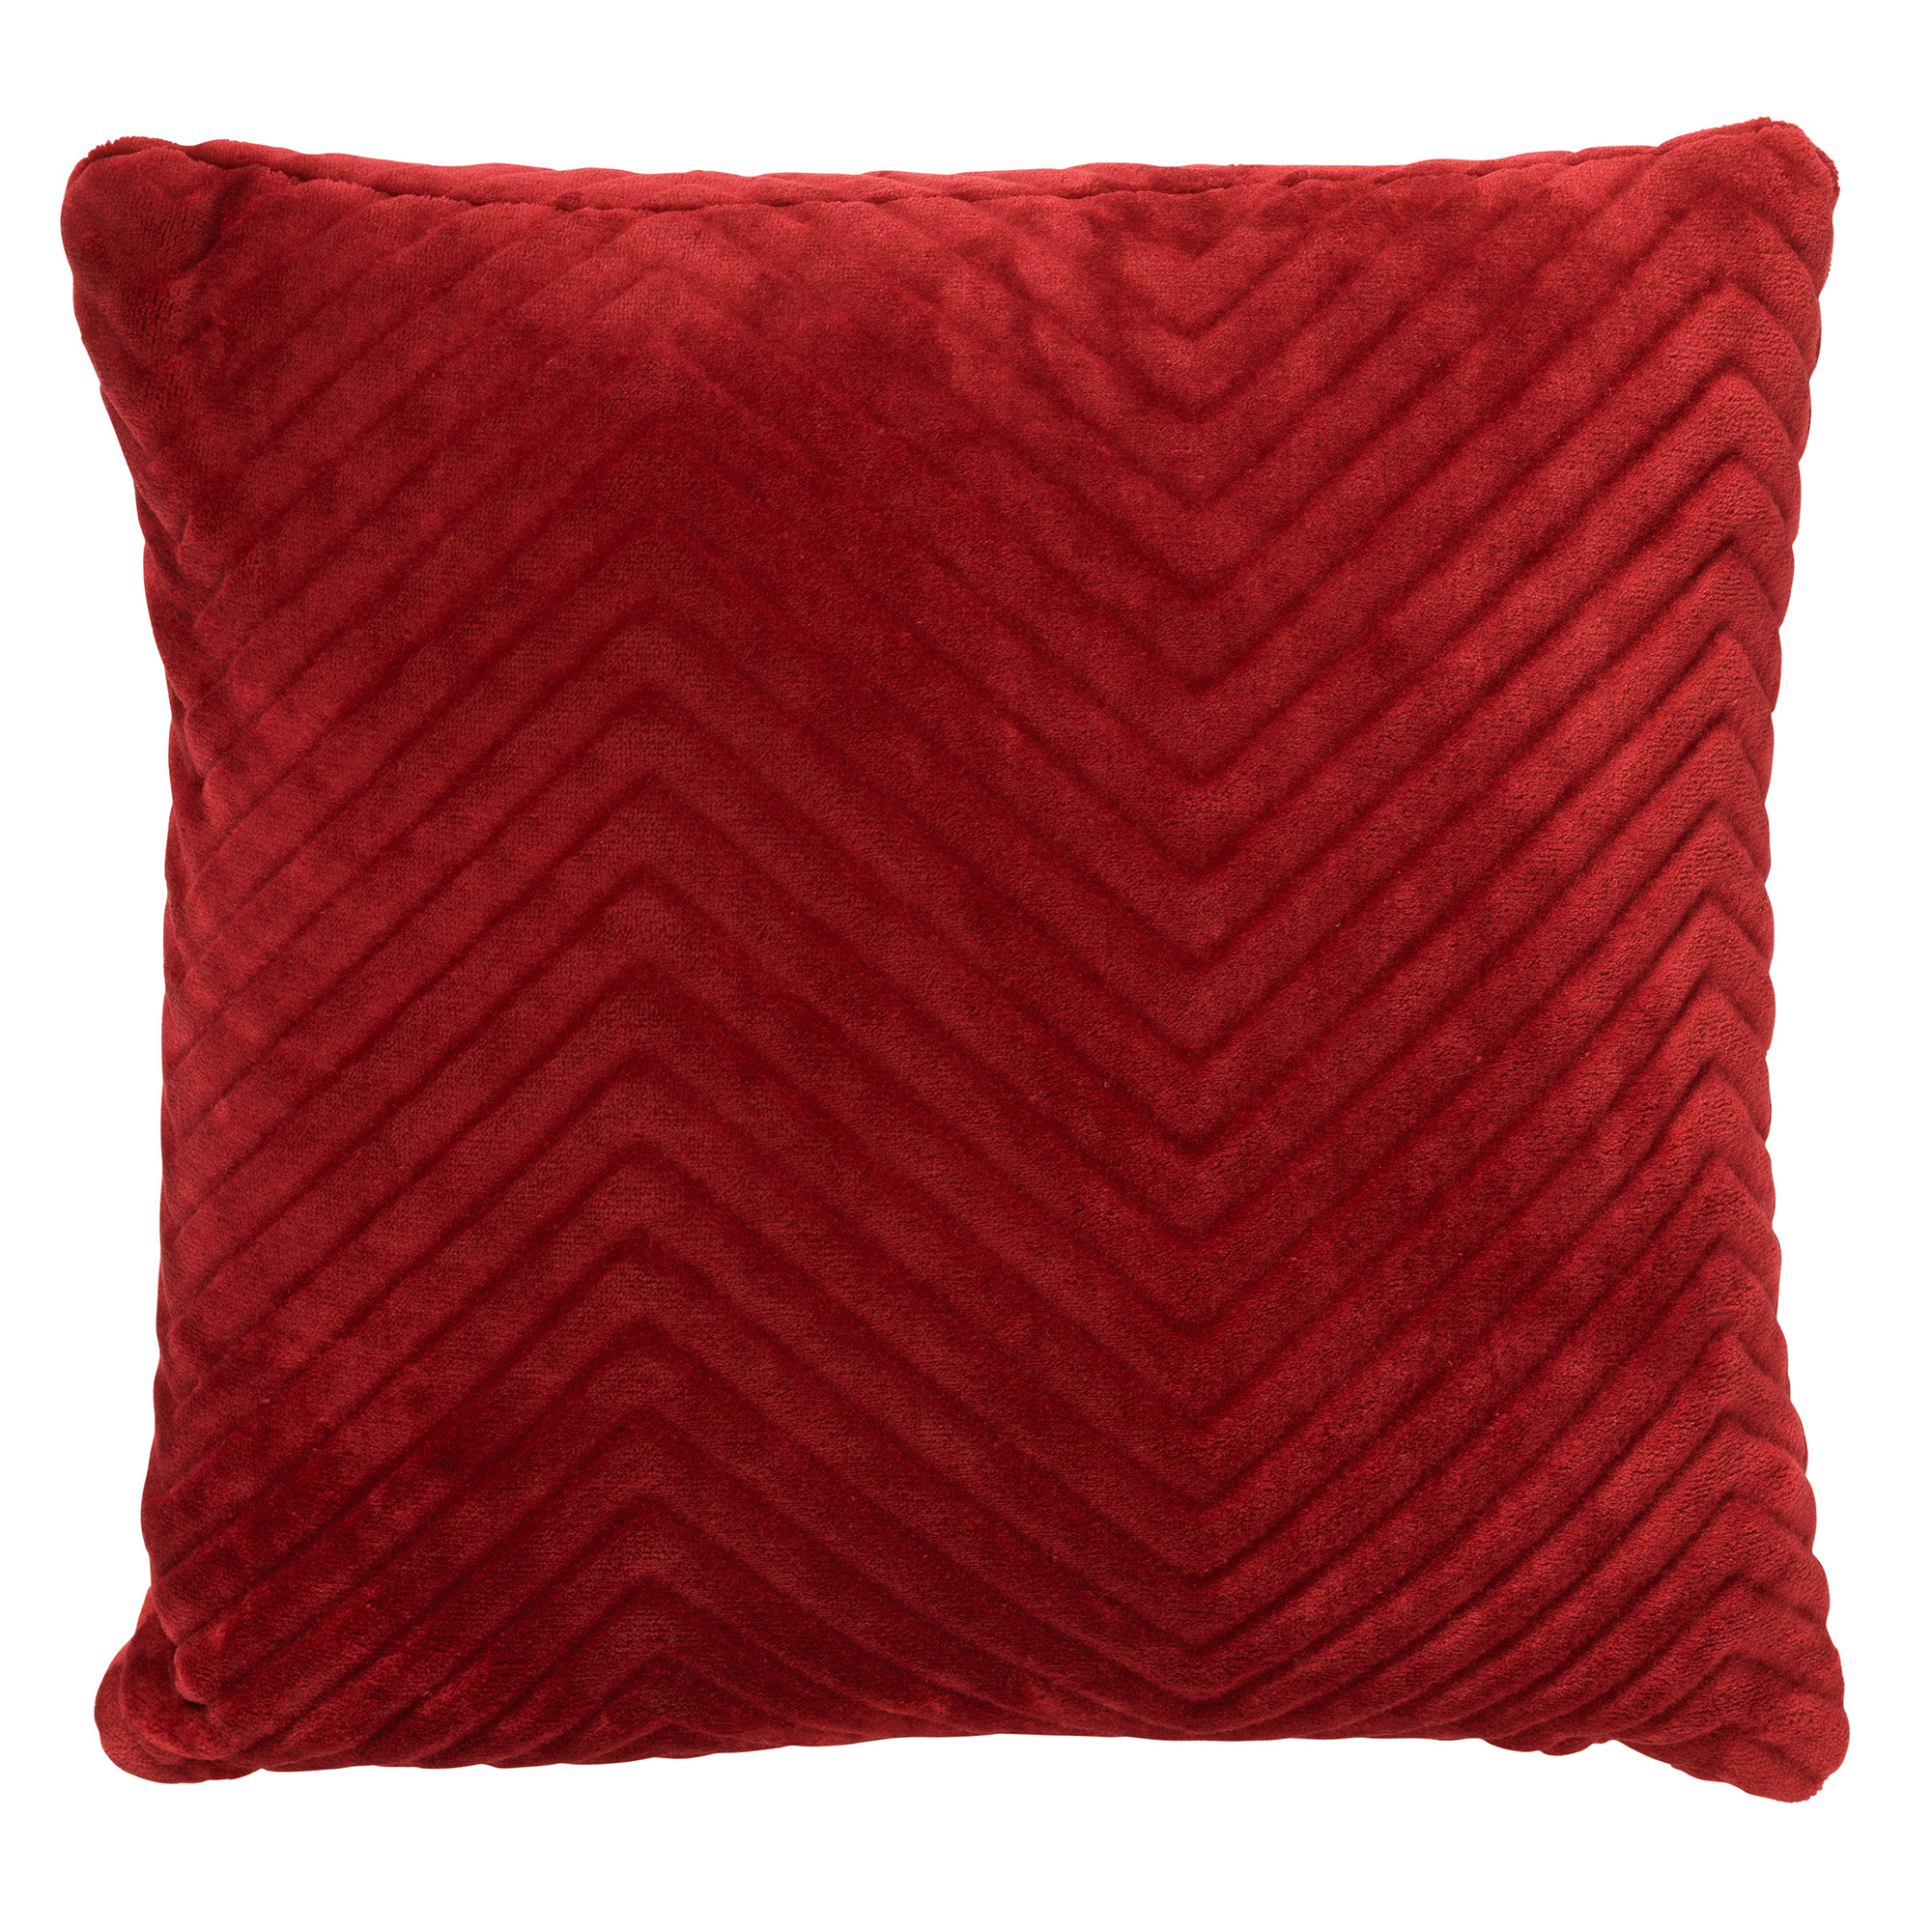 ZICO - Sierkussen zigzag 45x45 cm Merlot - rood - superzacht